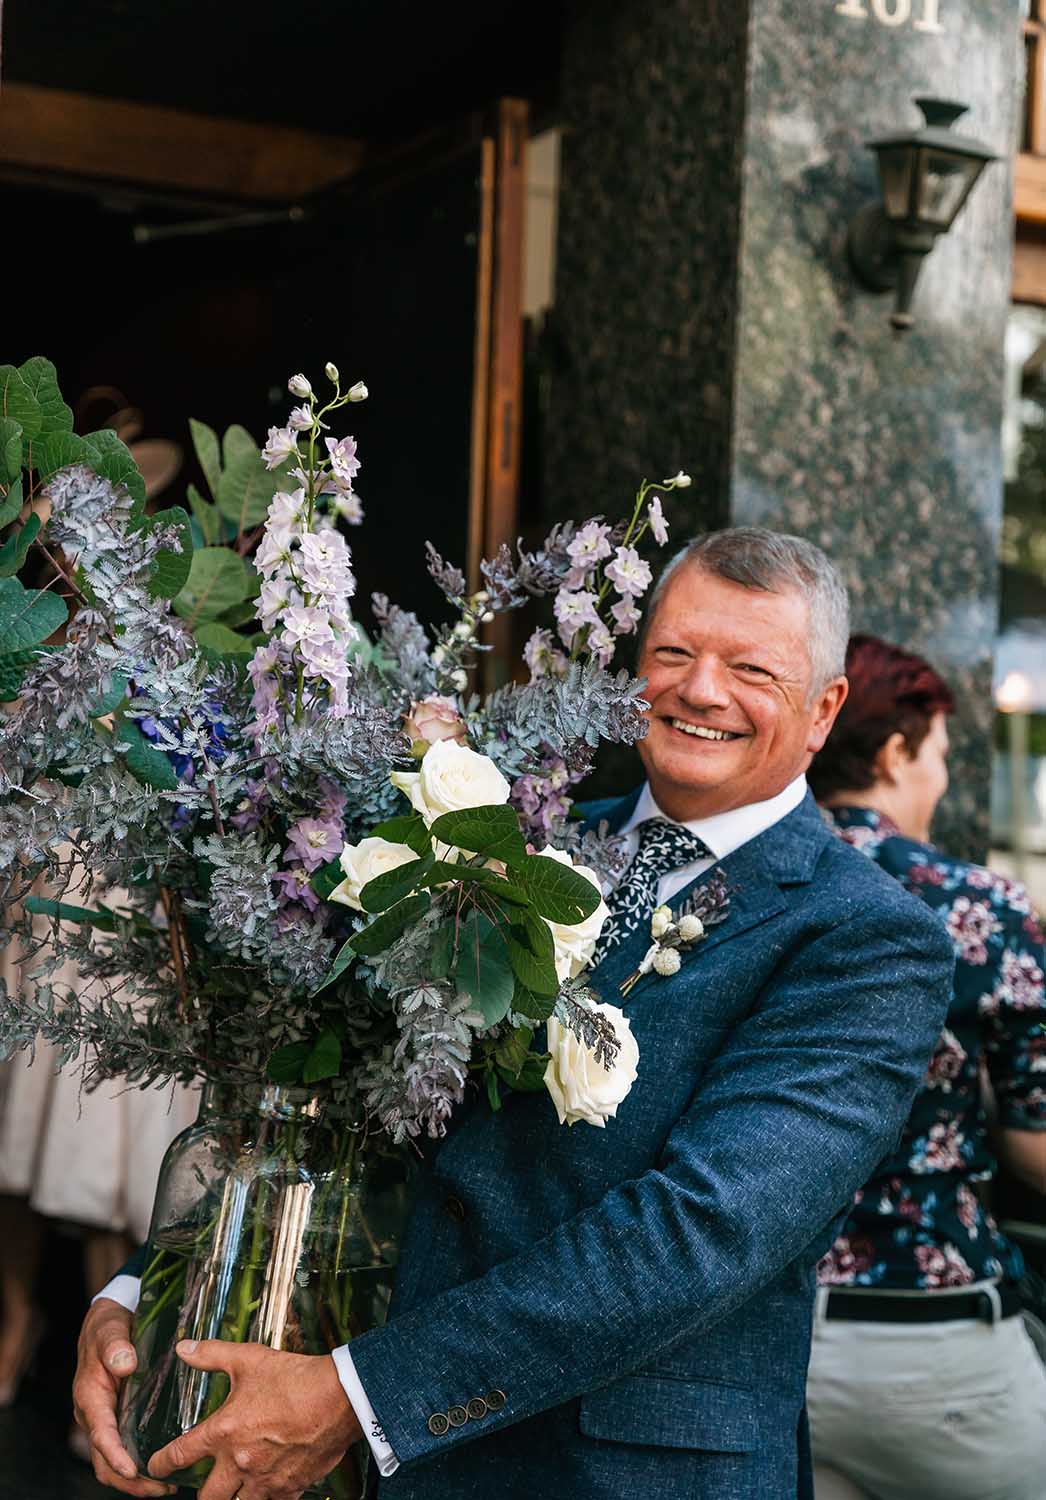 Destination Wedding Photography - Groomsmen Holding Flowers